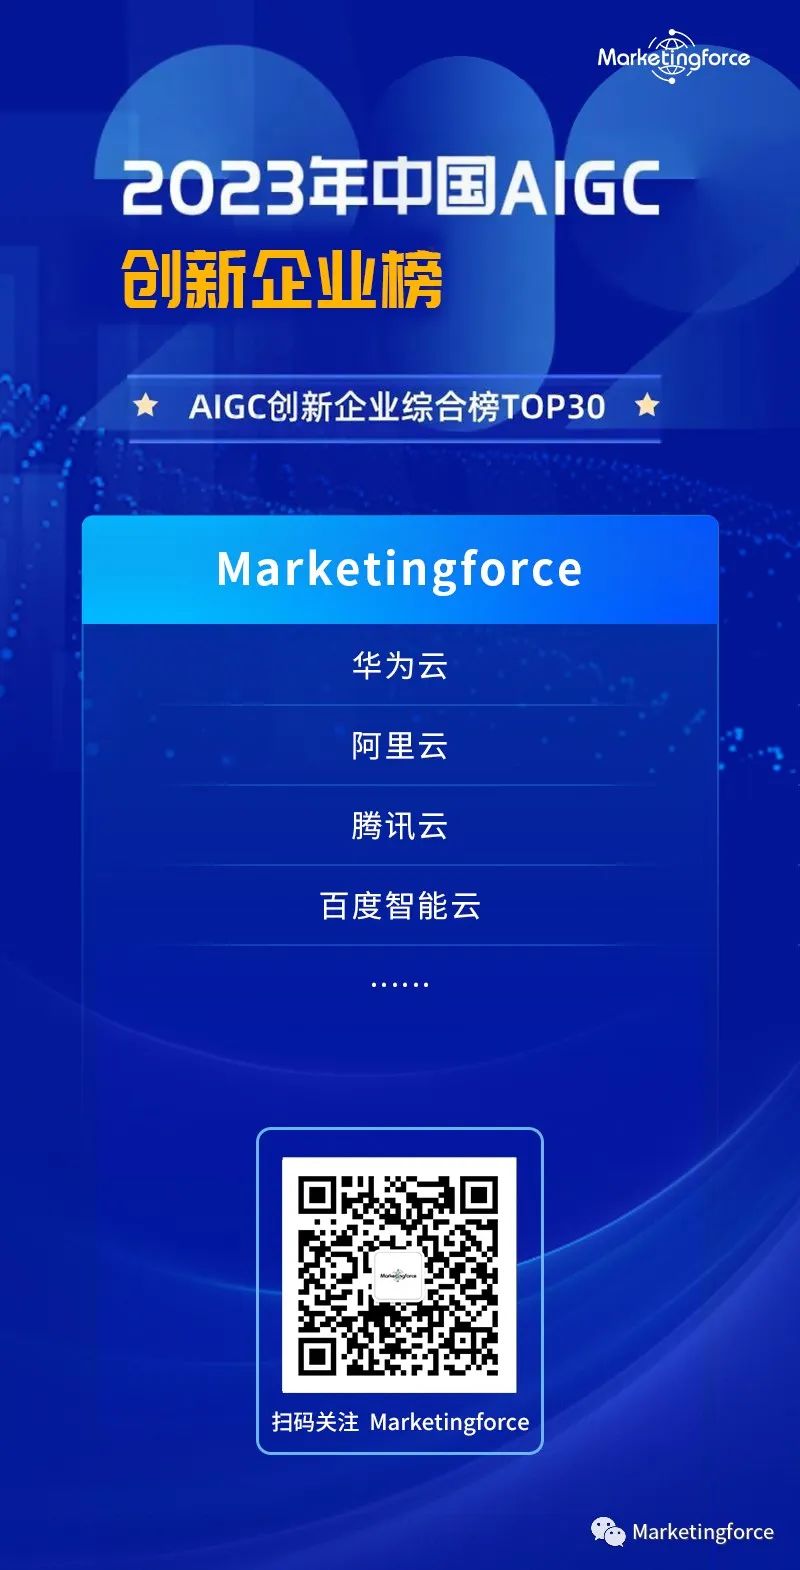 Marketingforce成功入选【AIGC创新企业综合榜TOP30】